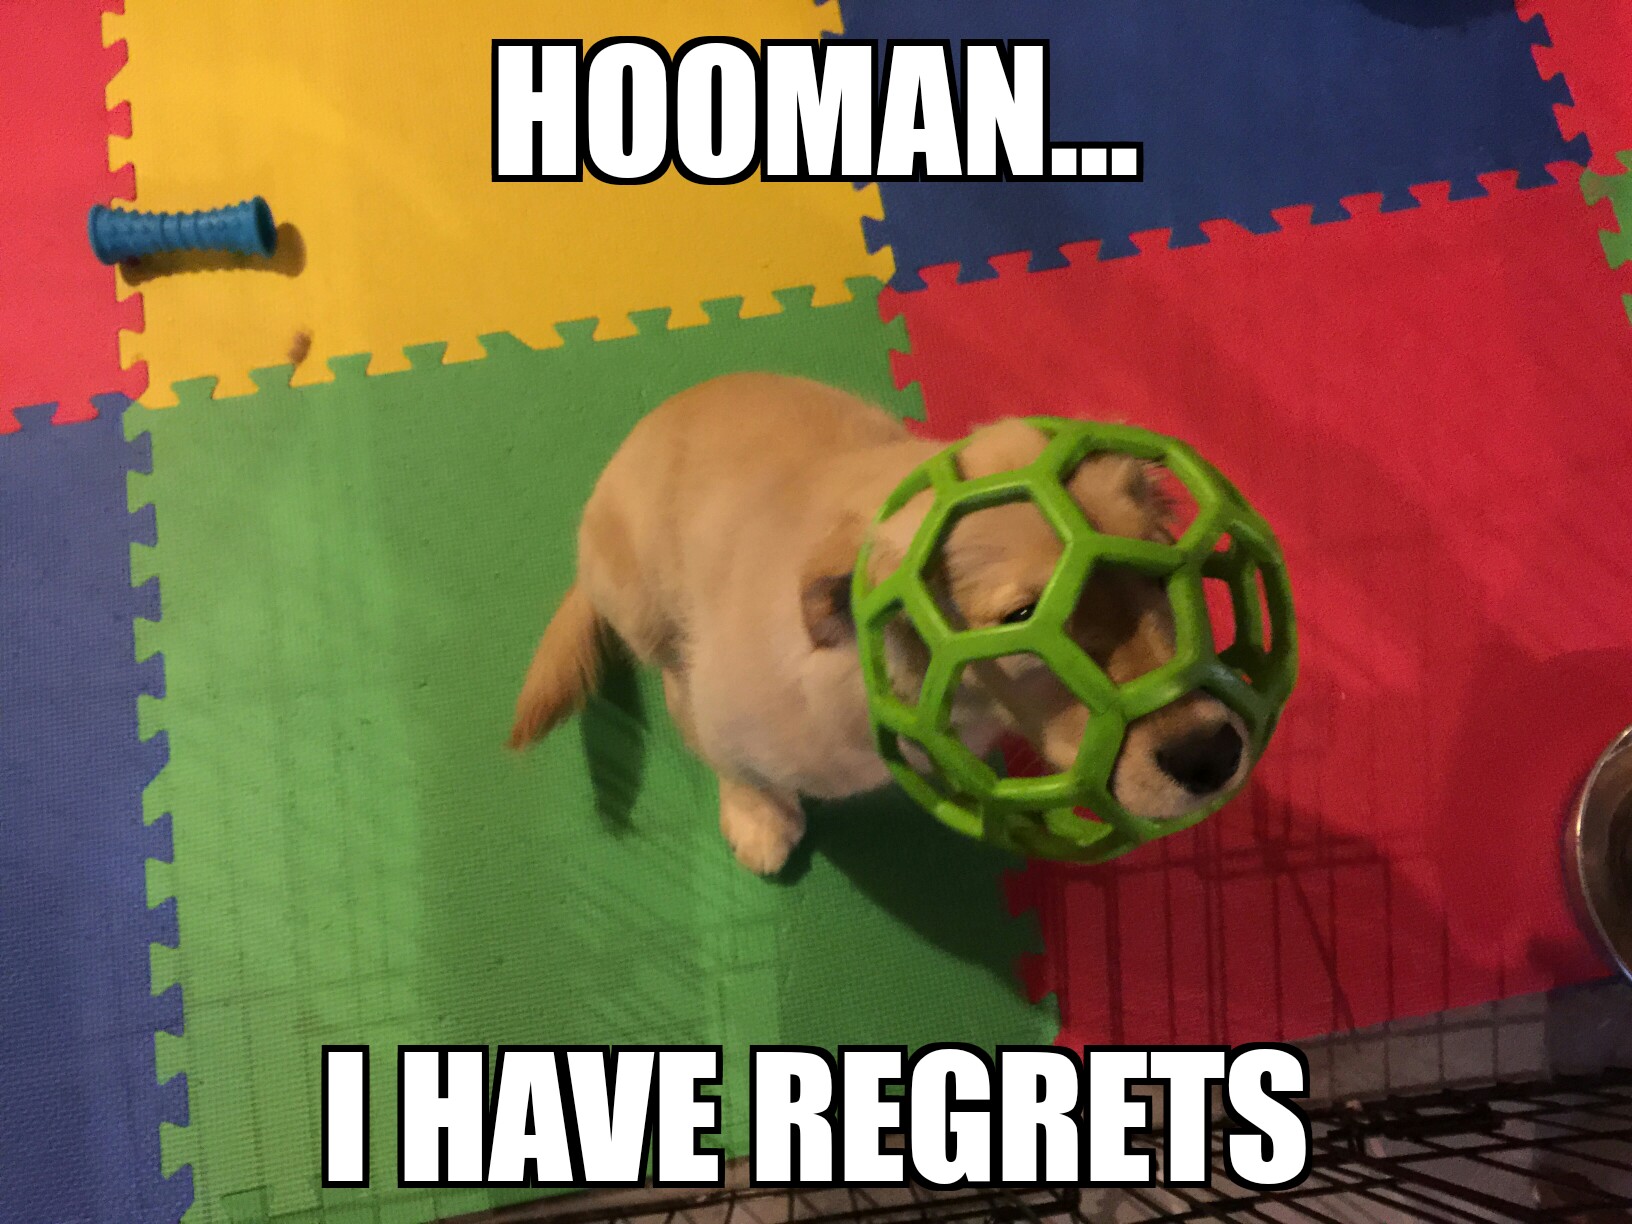 Hooman... I have regrets. By SaintMikeTheGreat on Imgur.